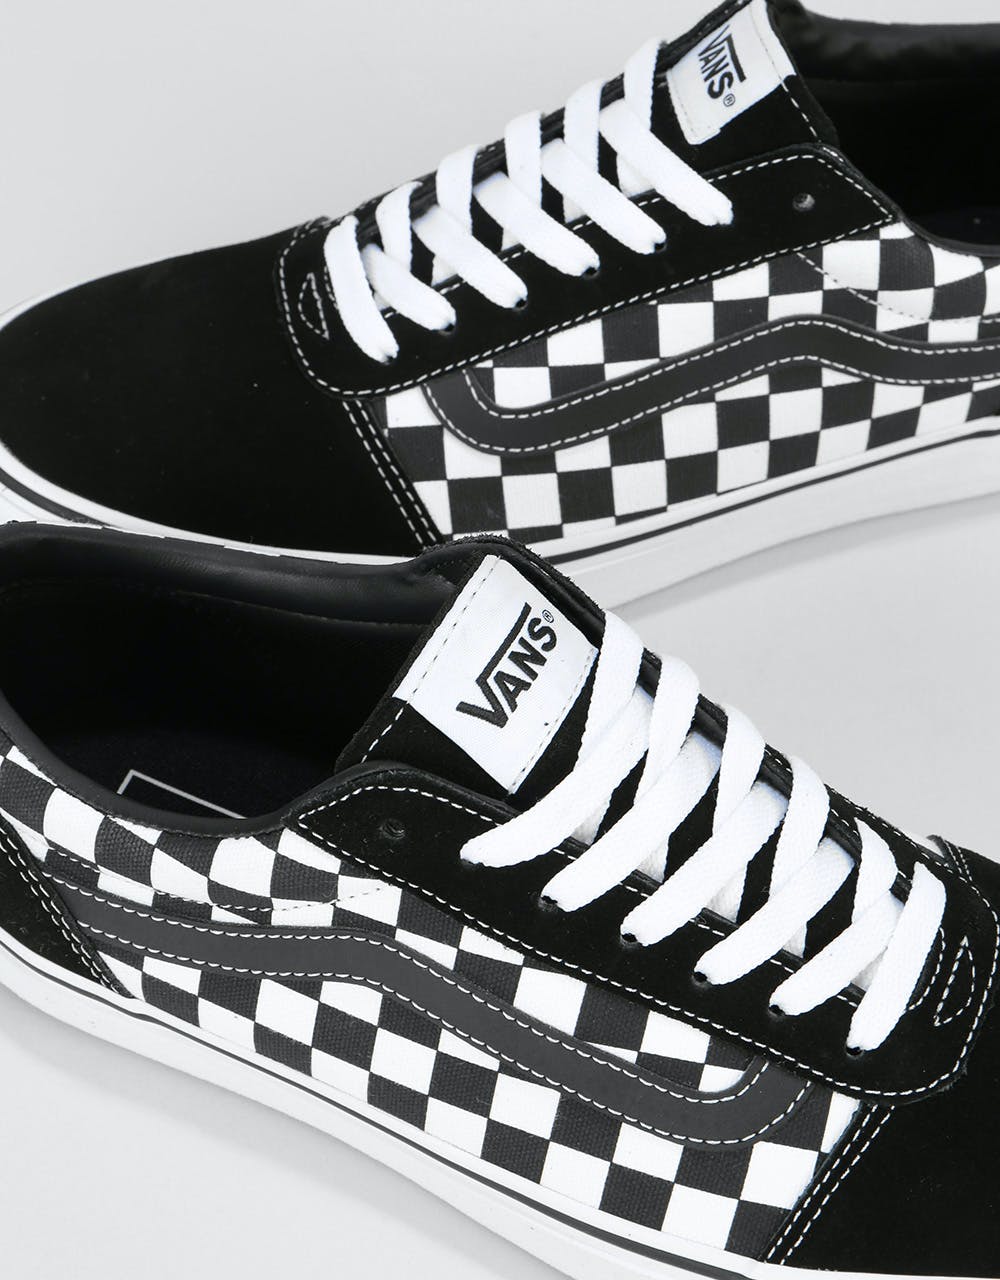 Vans Ward Skate Shoes - (Checkered) Black/True White